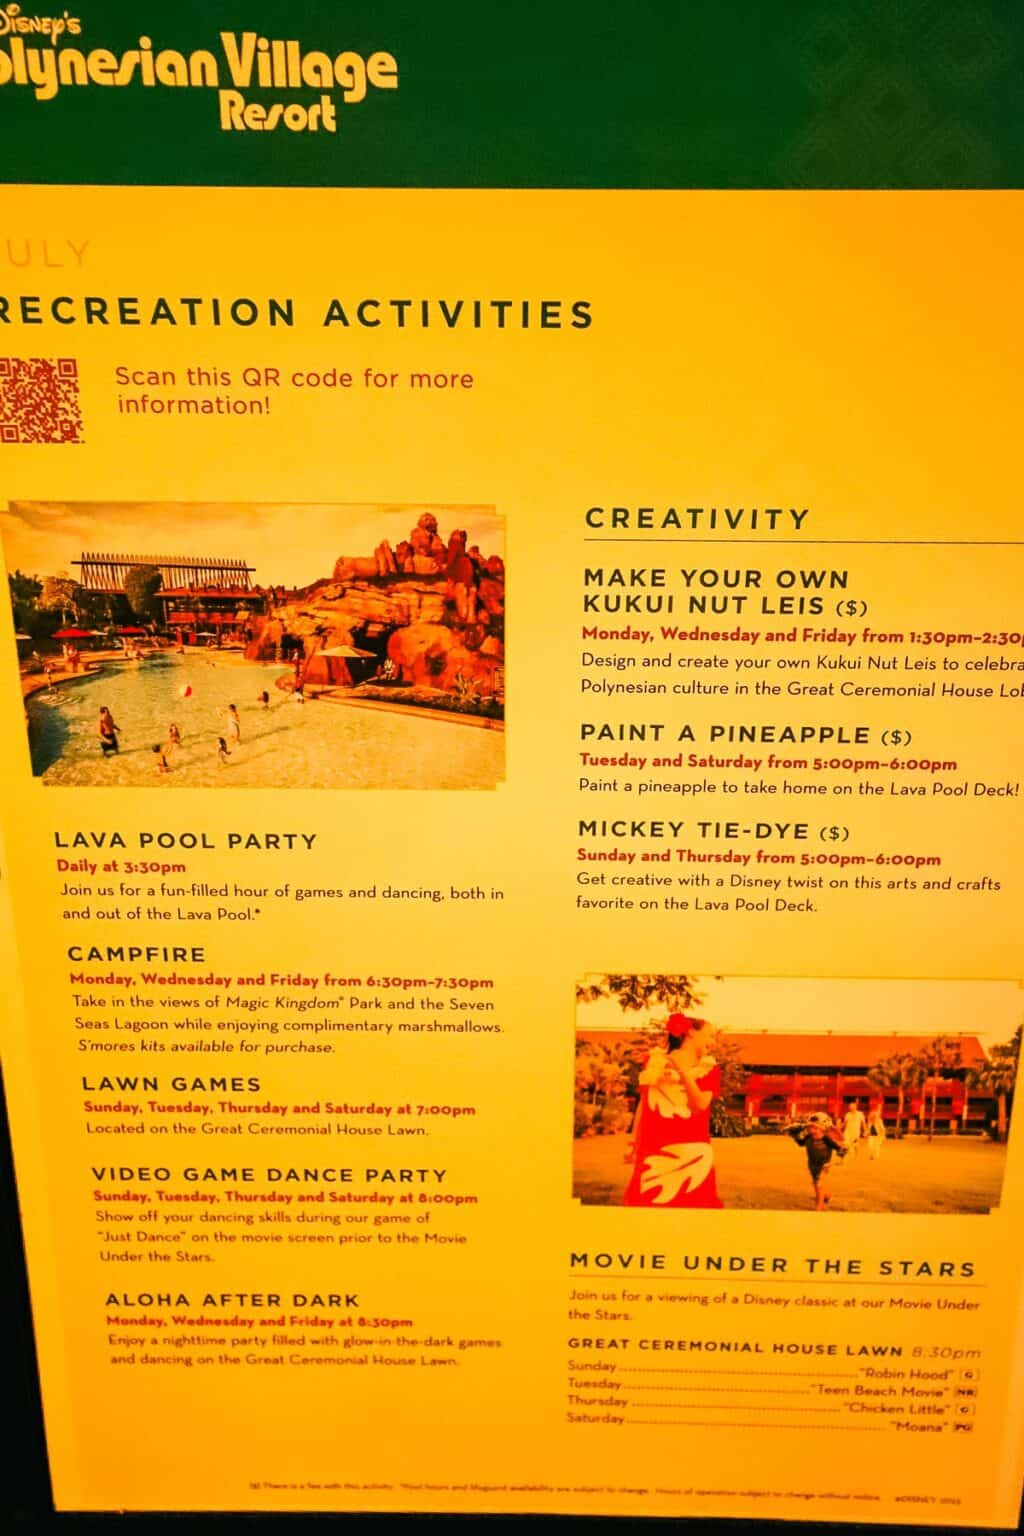 Disney World Resort Recreation Calendars with Movie Under the Stars